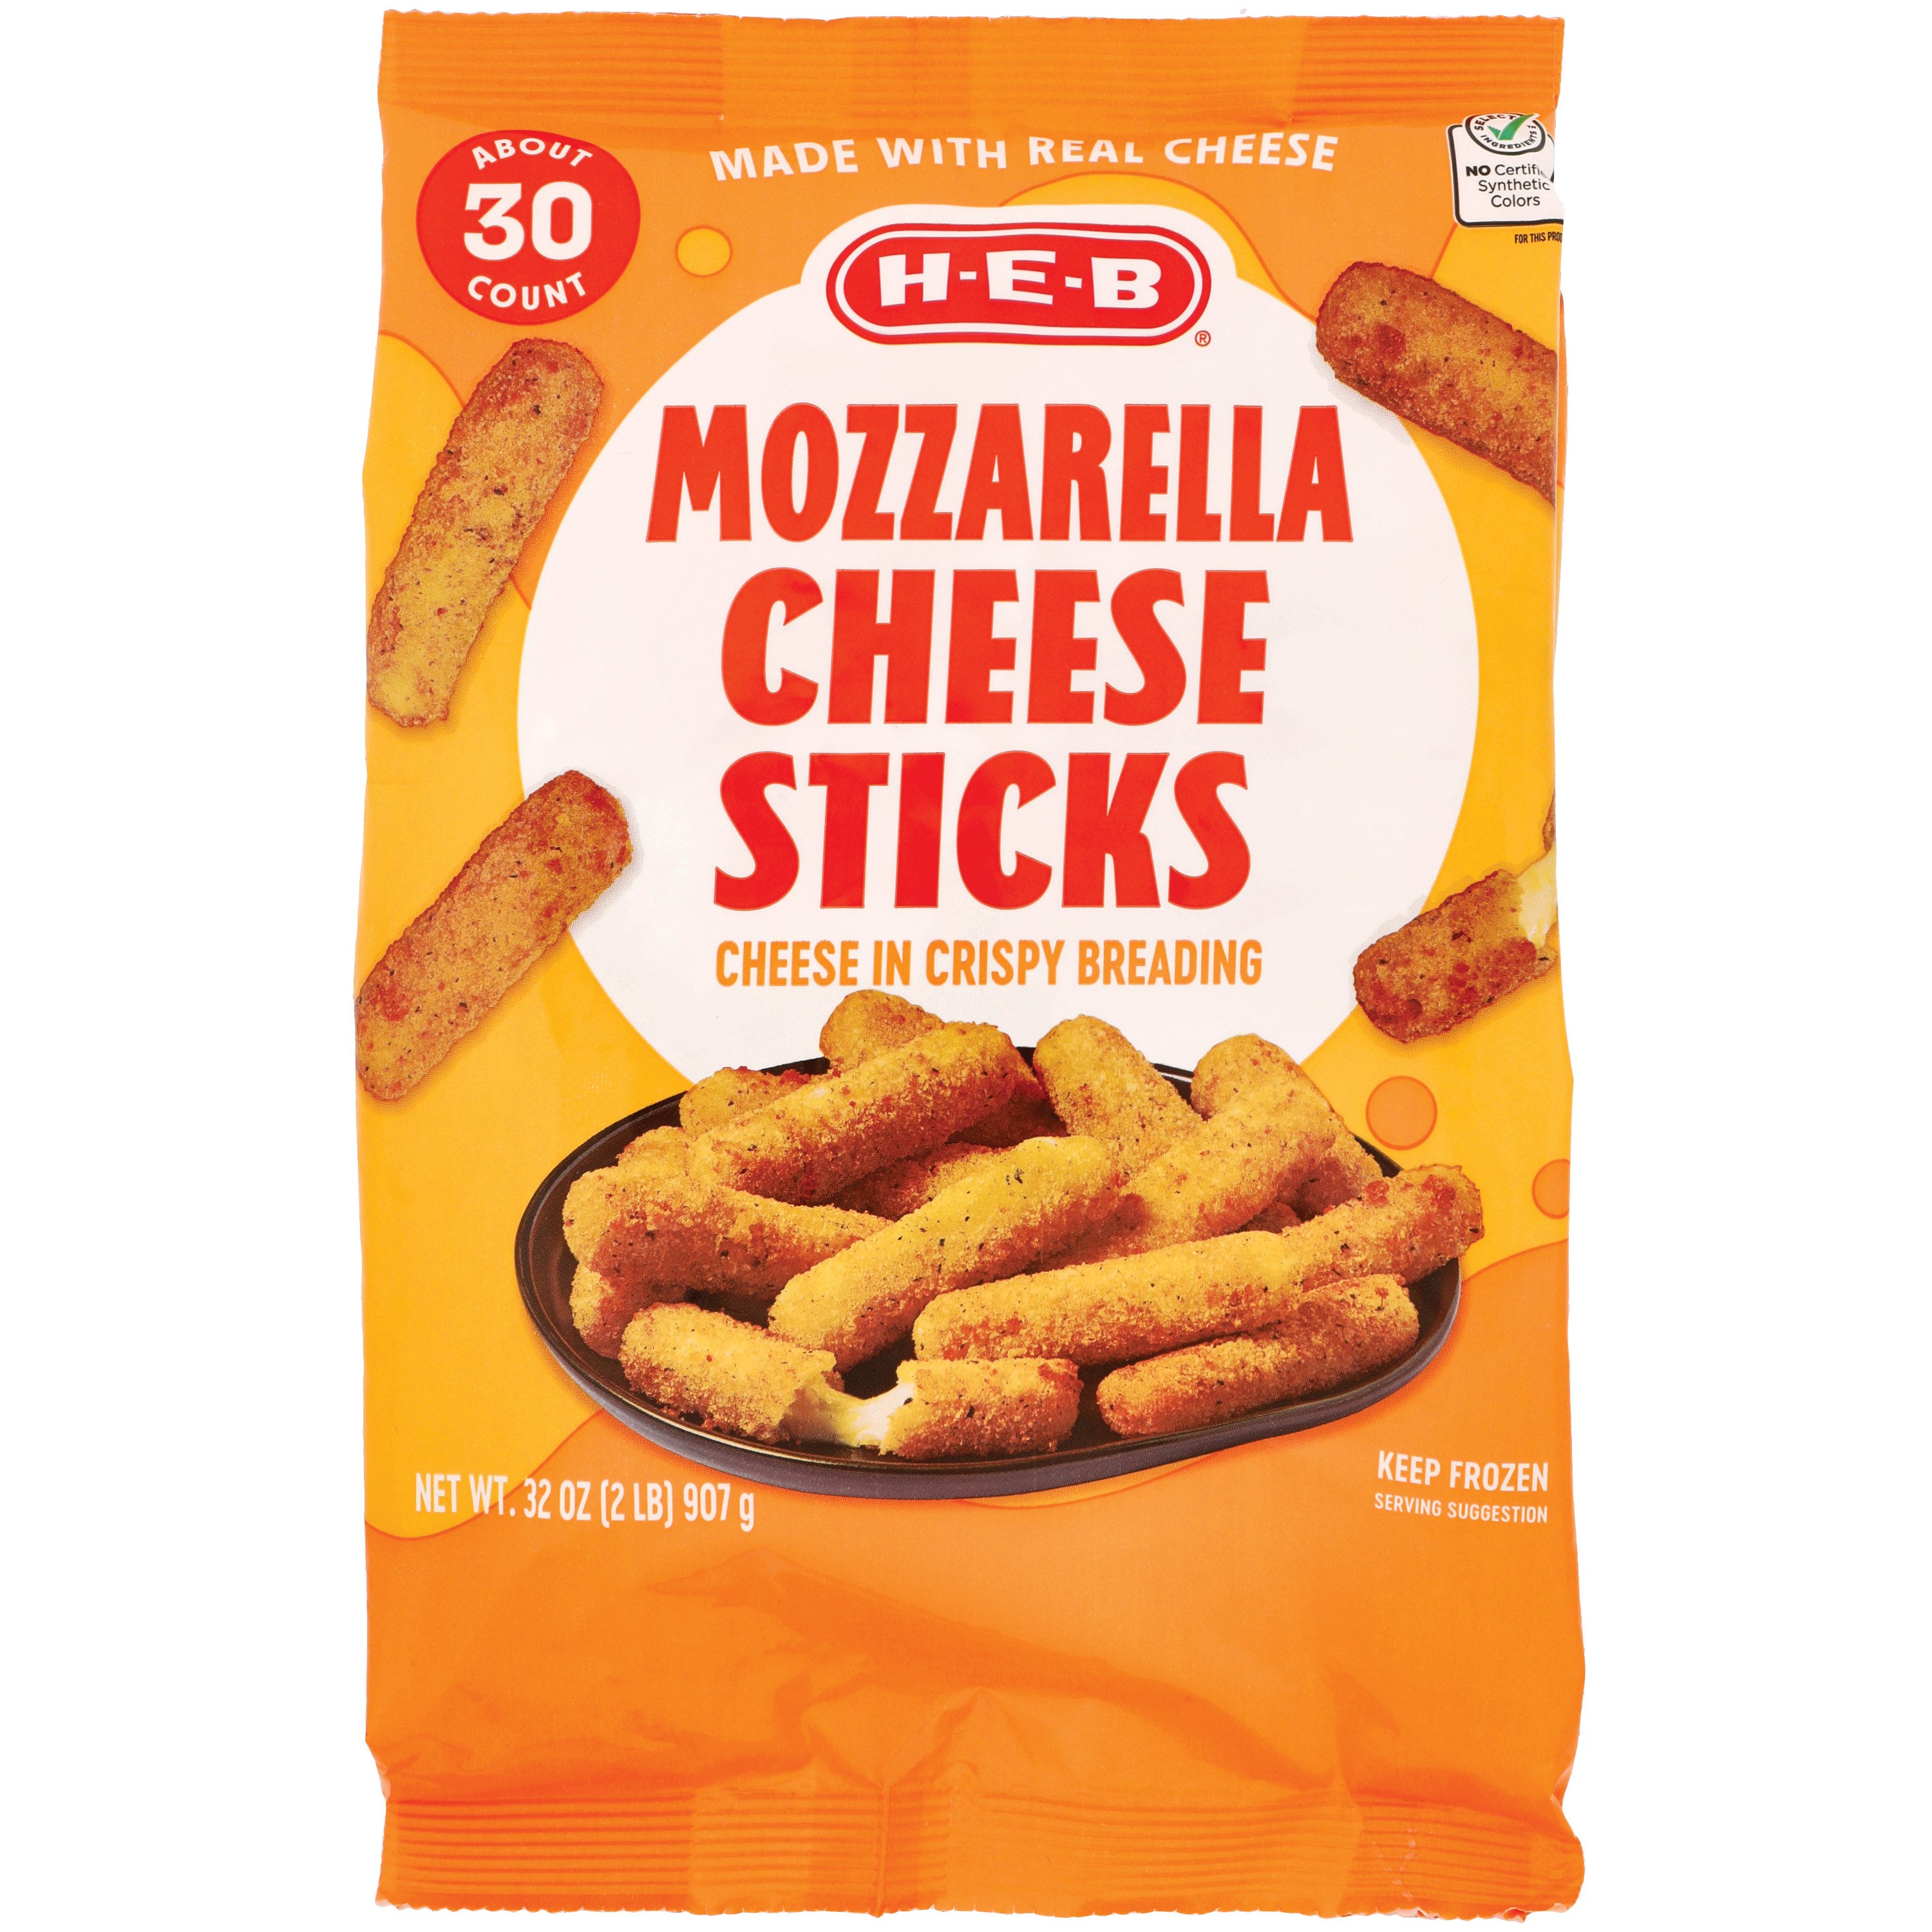 mozzarella cheese sticks